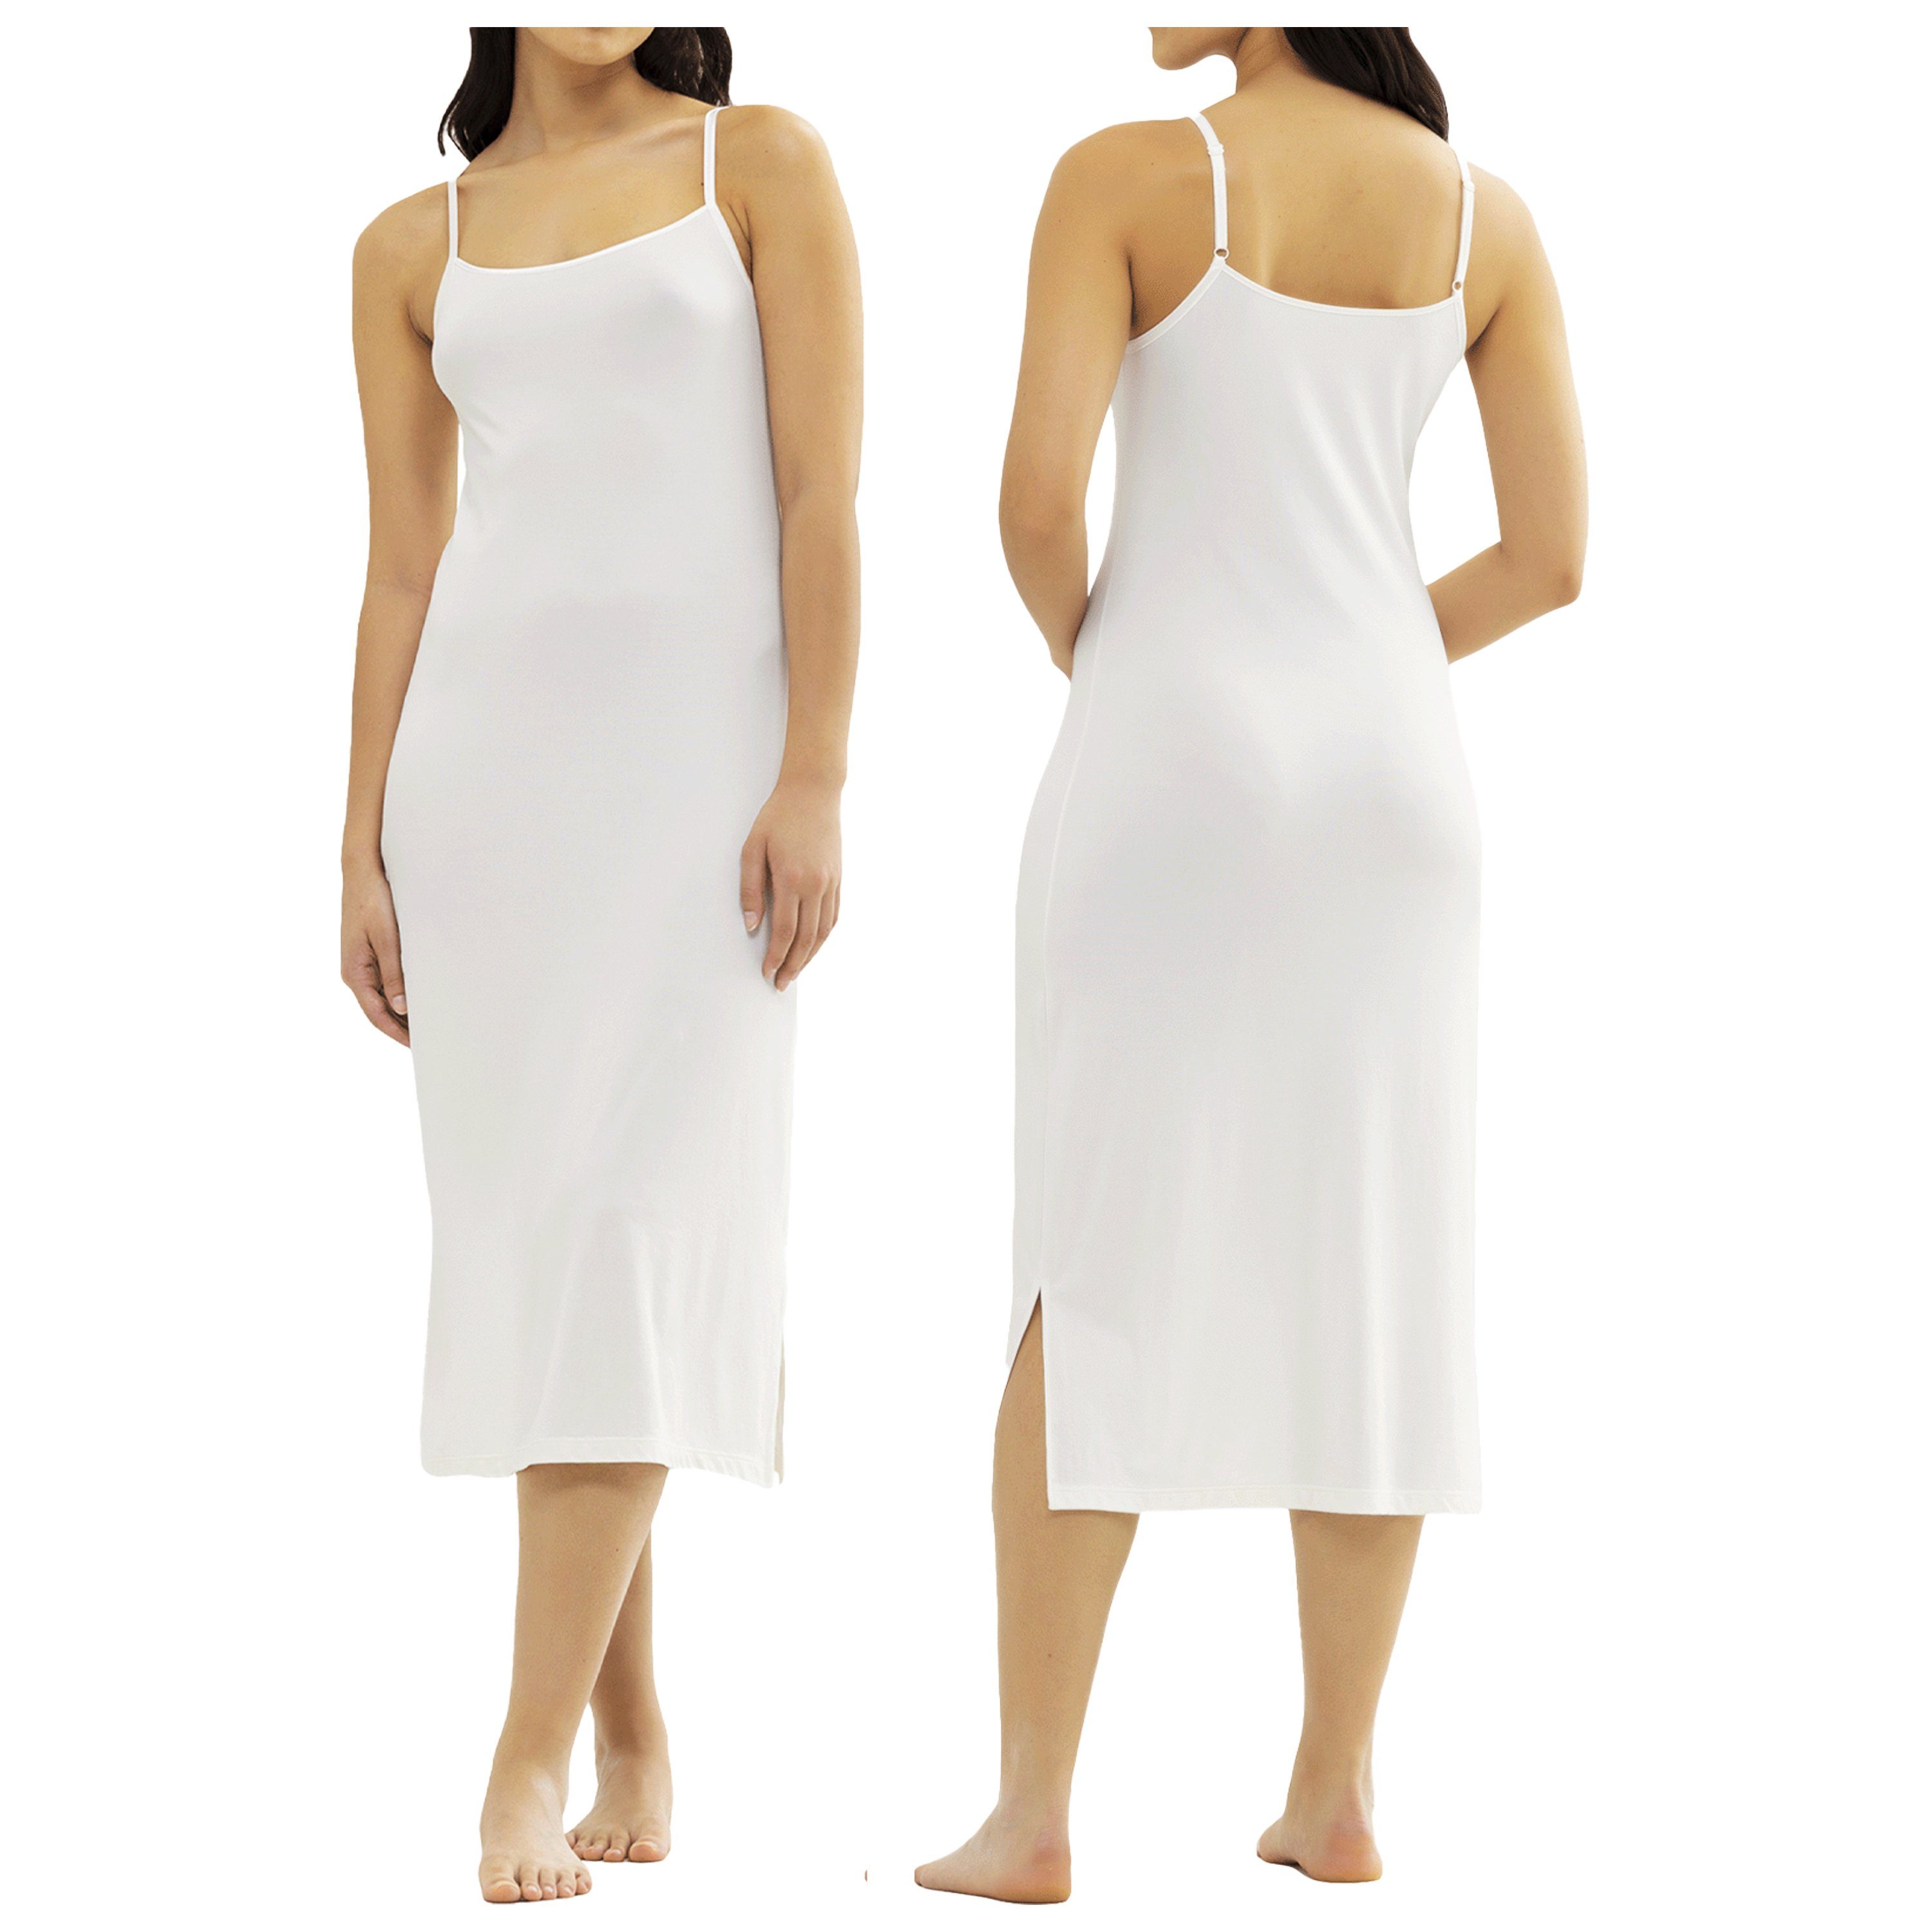 TEXEMP Unterkleid Damen Unterkleid Unterrock Nachtkleid Mini Spaghettiträger Unterwäsche (1-tlg) Bambus Viskose Weiß